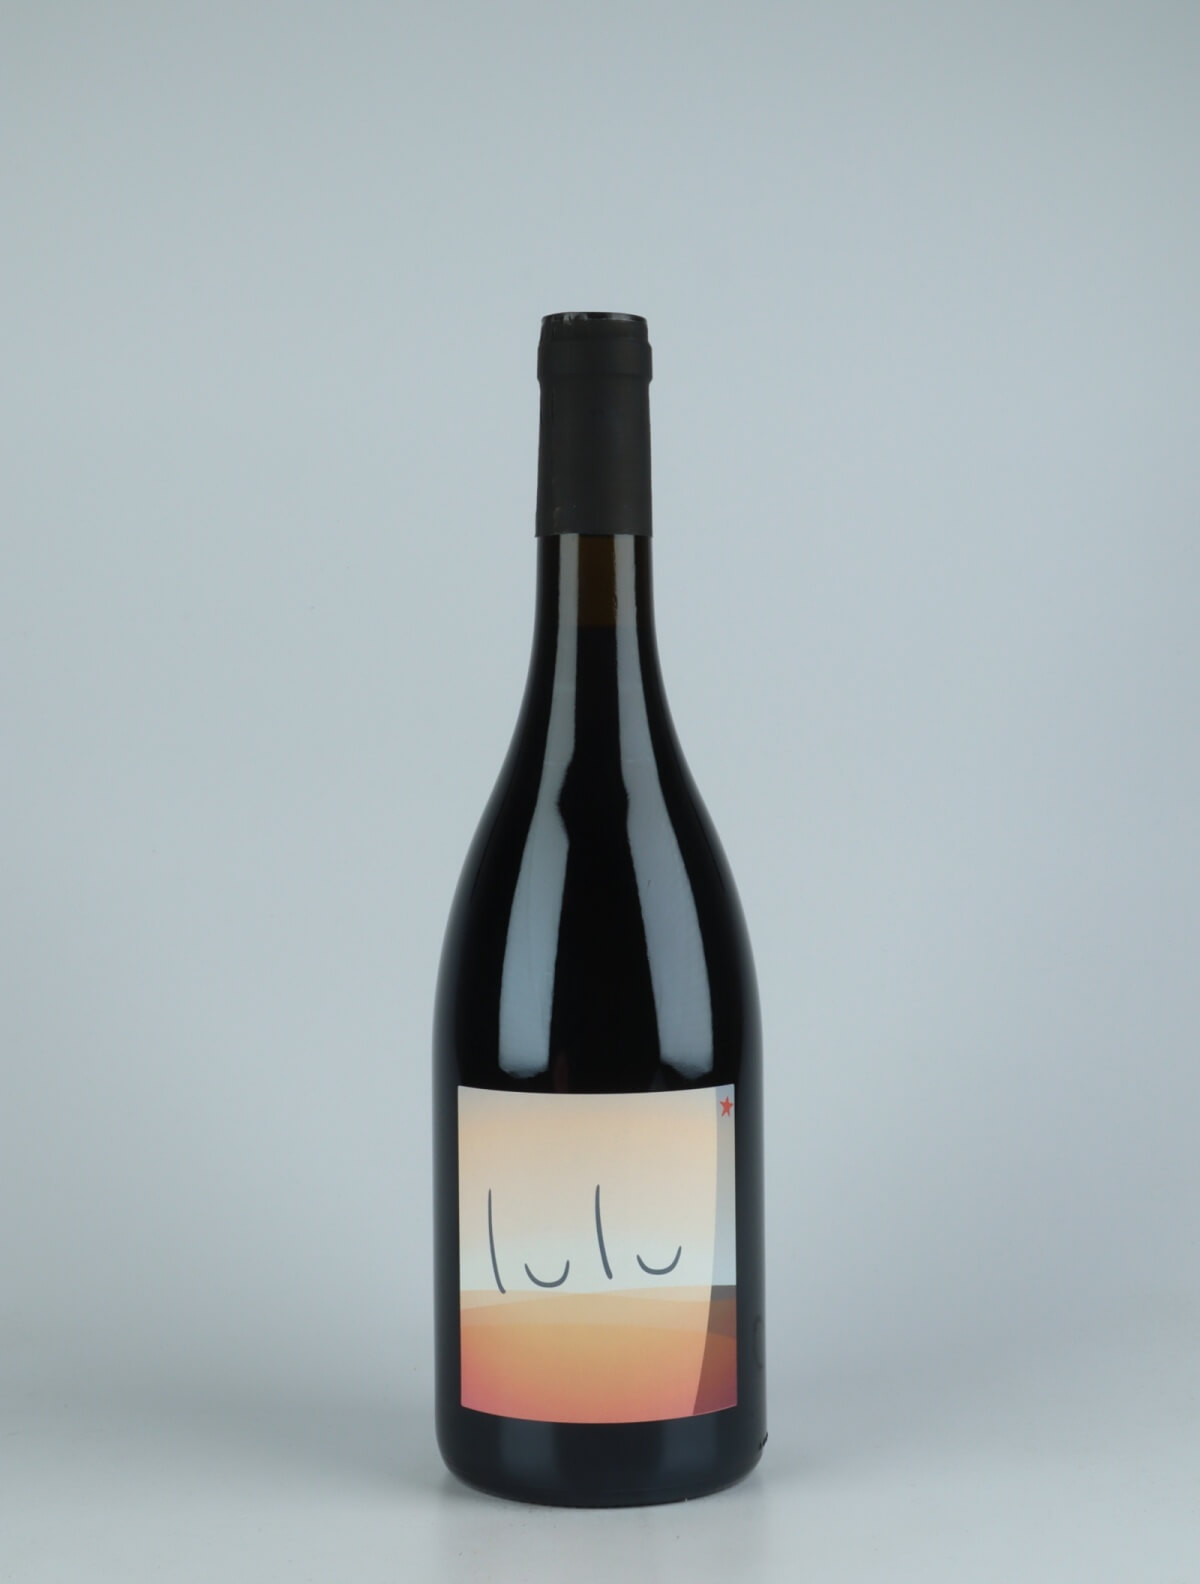 A bottle 2020 Lulu Red wine from Patrick Bouju, Auvergne in France